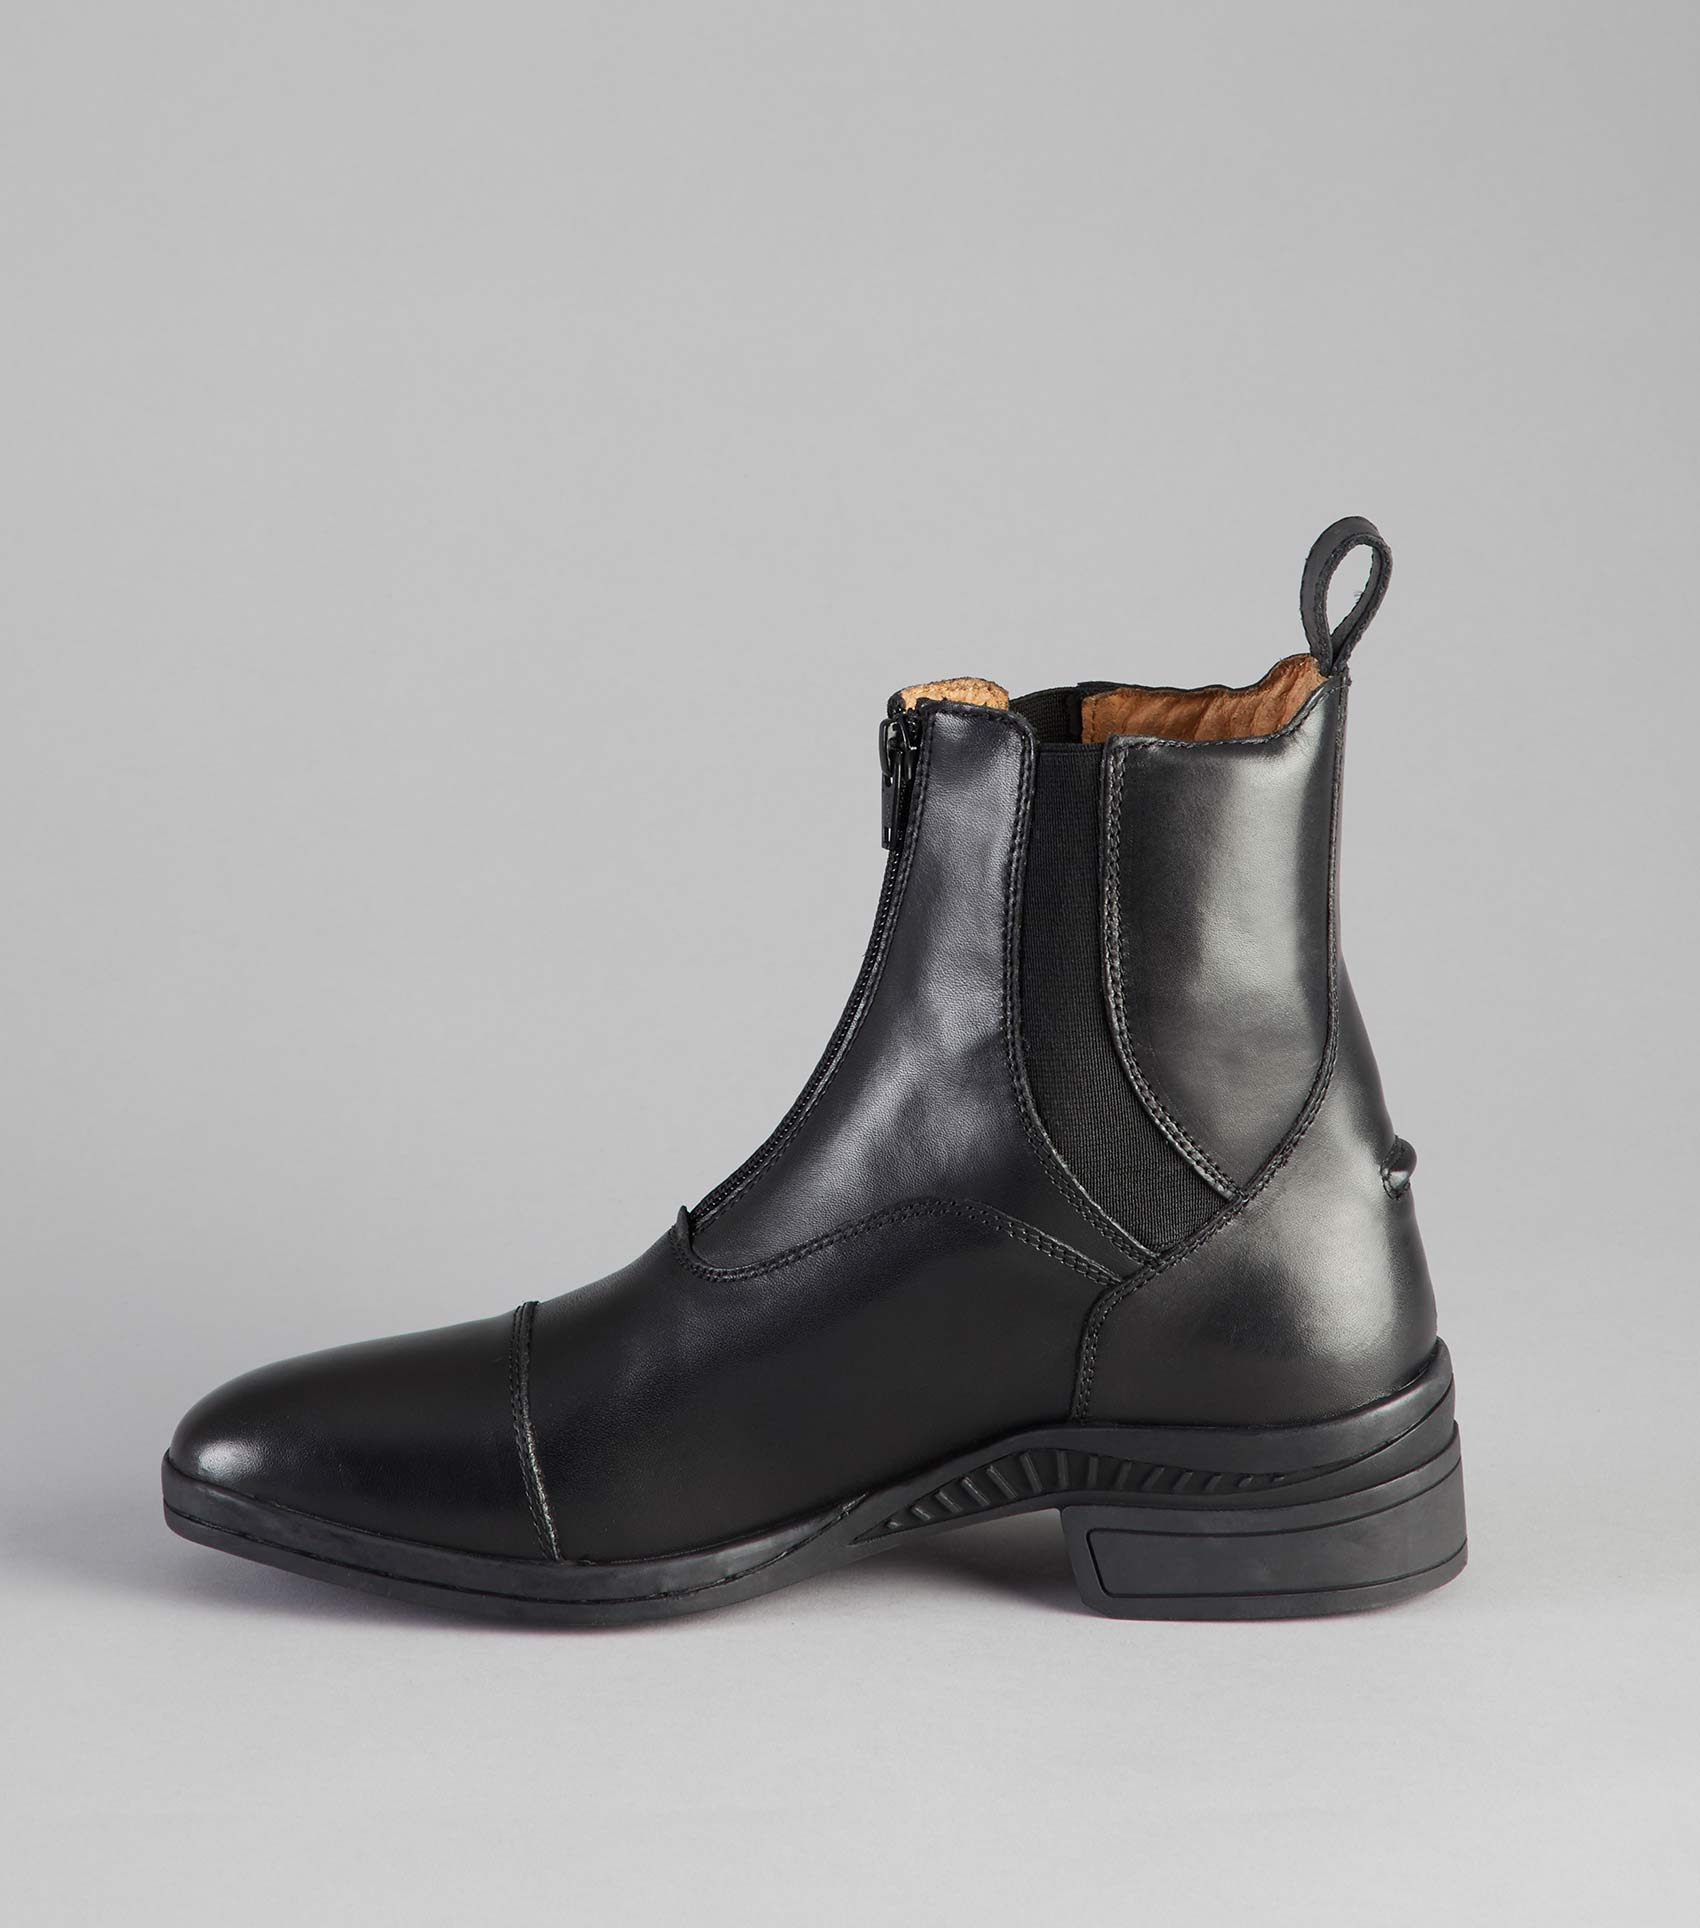 PE Balmoral Leather Paddock/Riding Boot